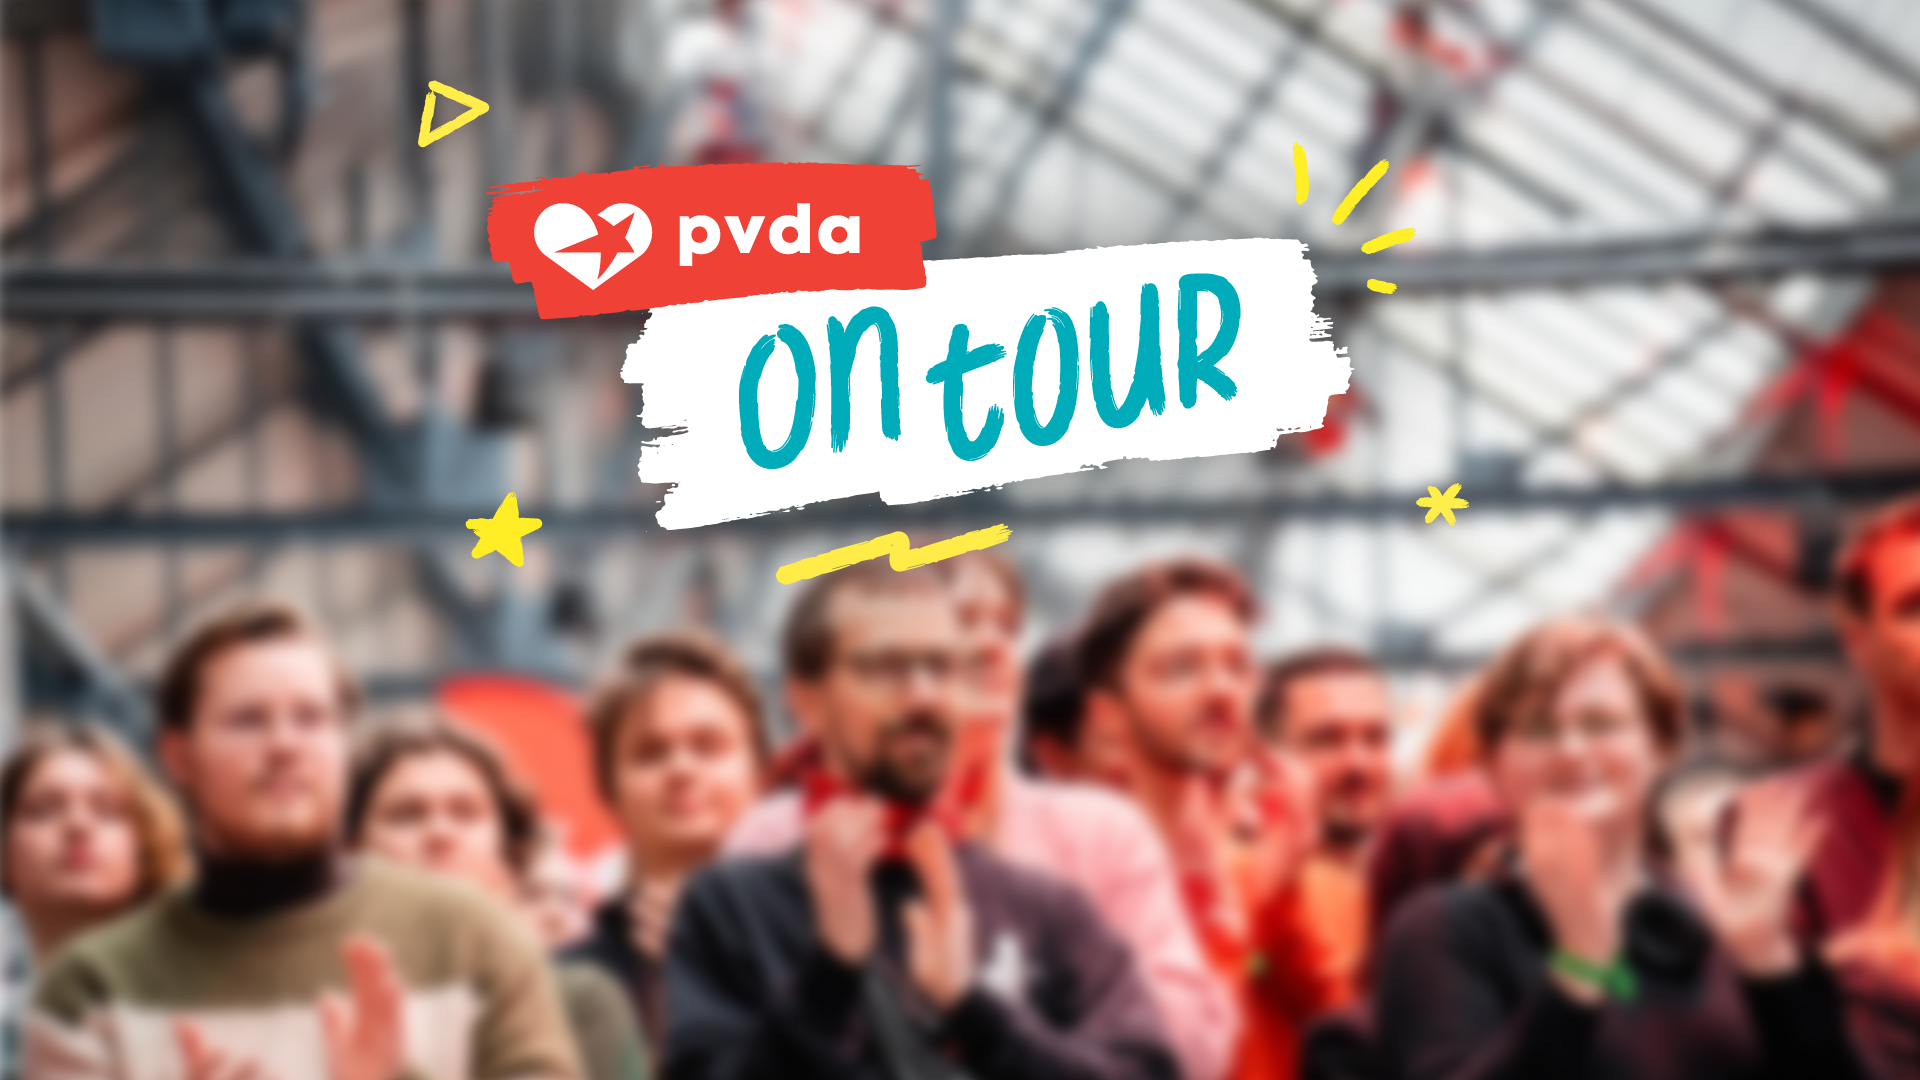 PVDA On Tour in Zelzate